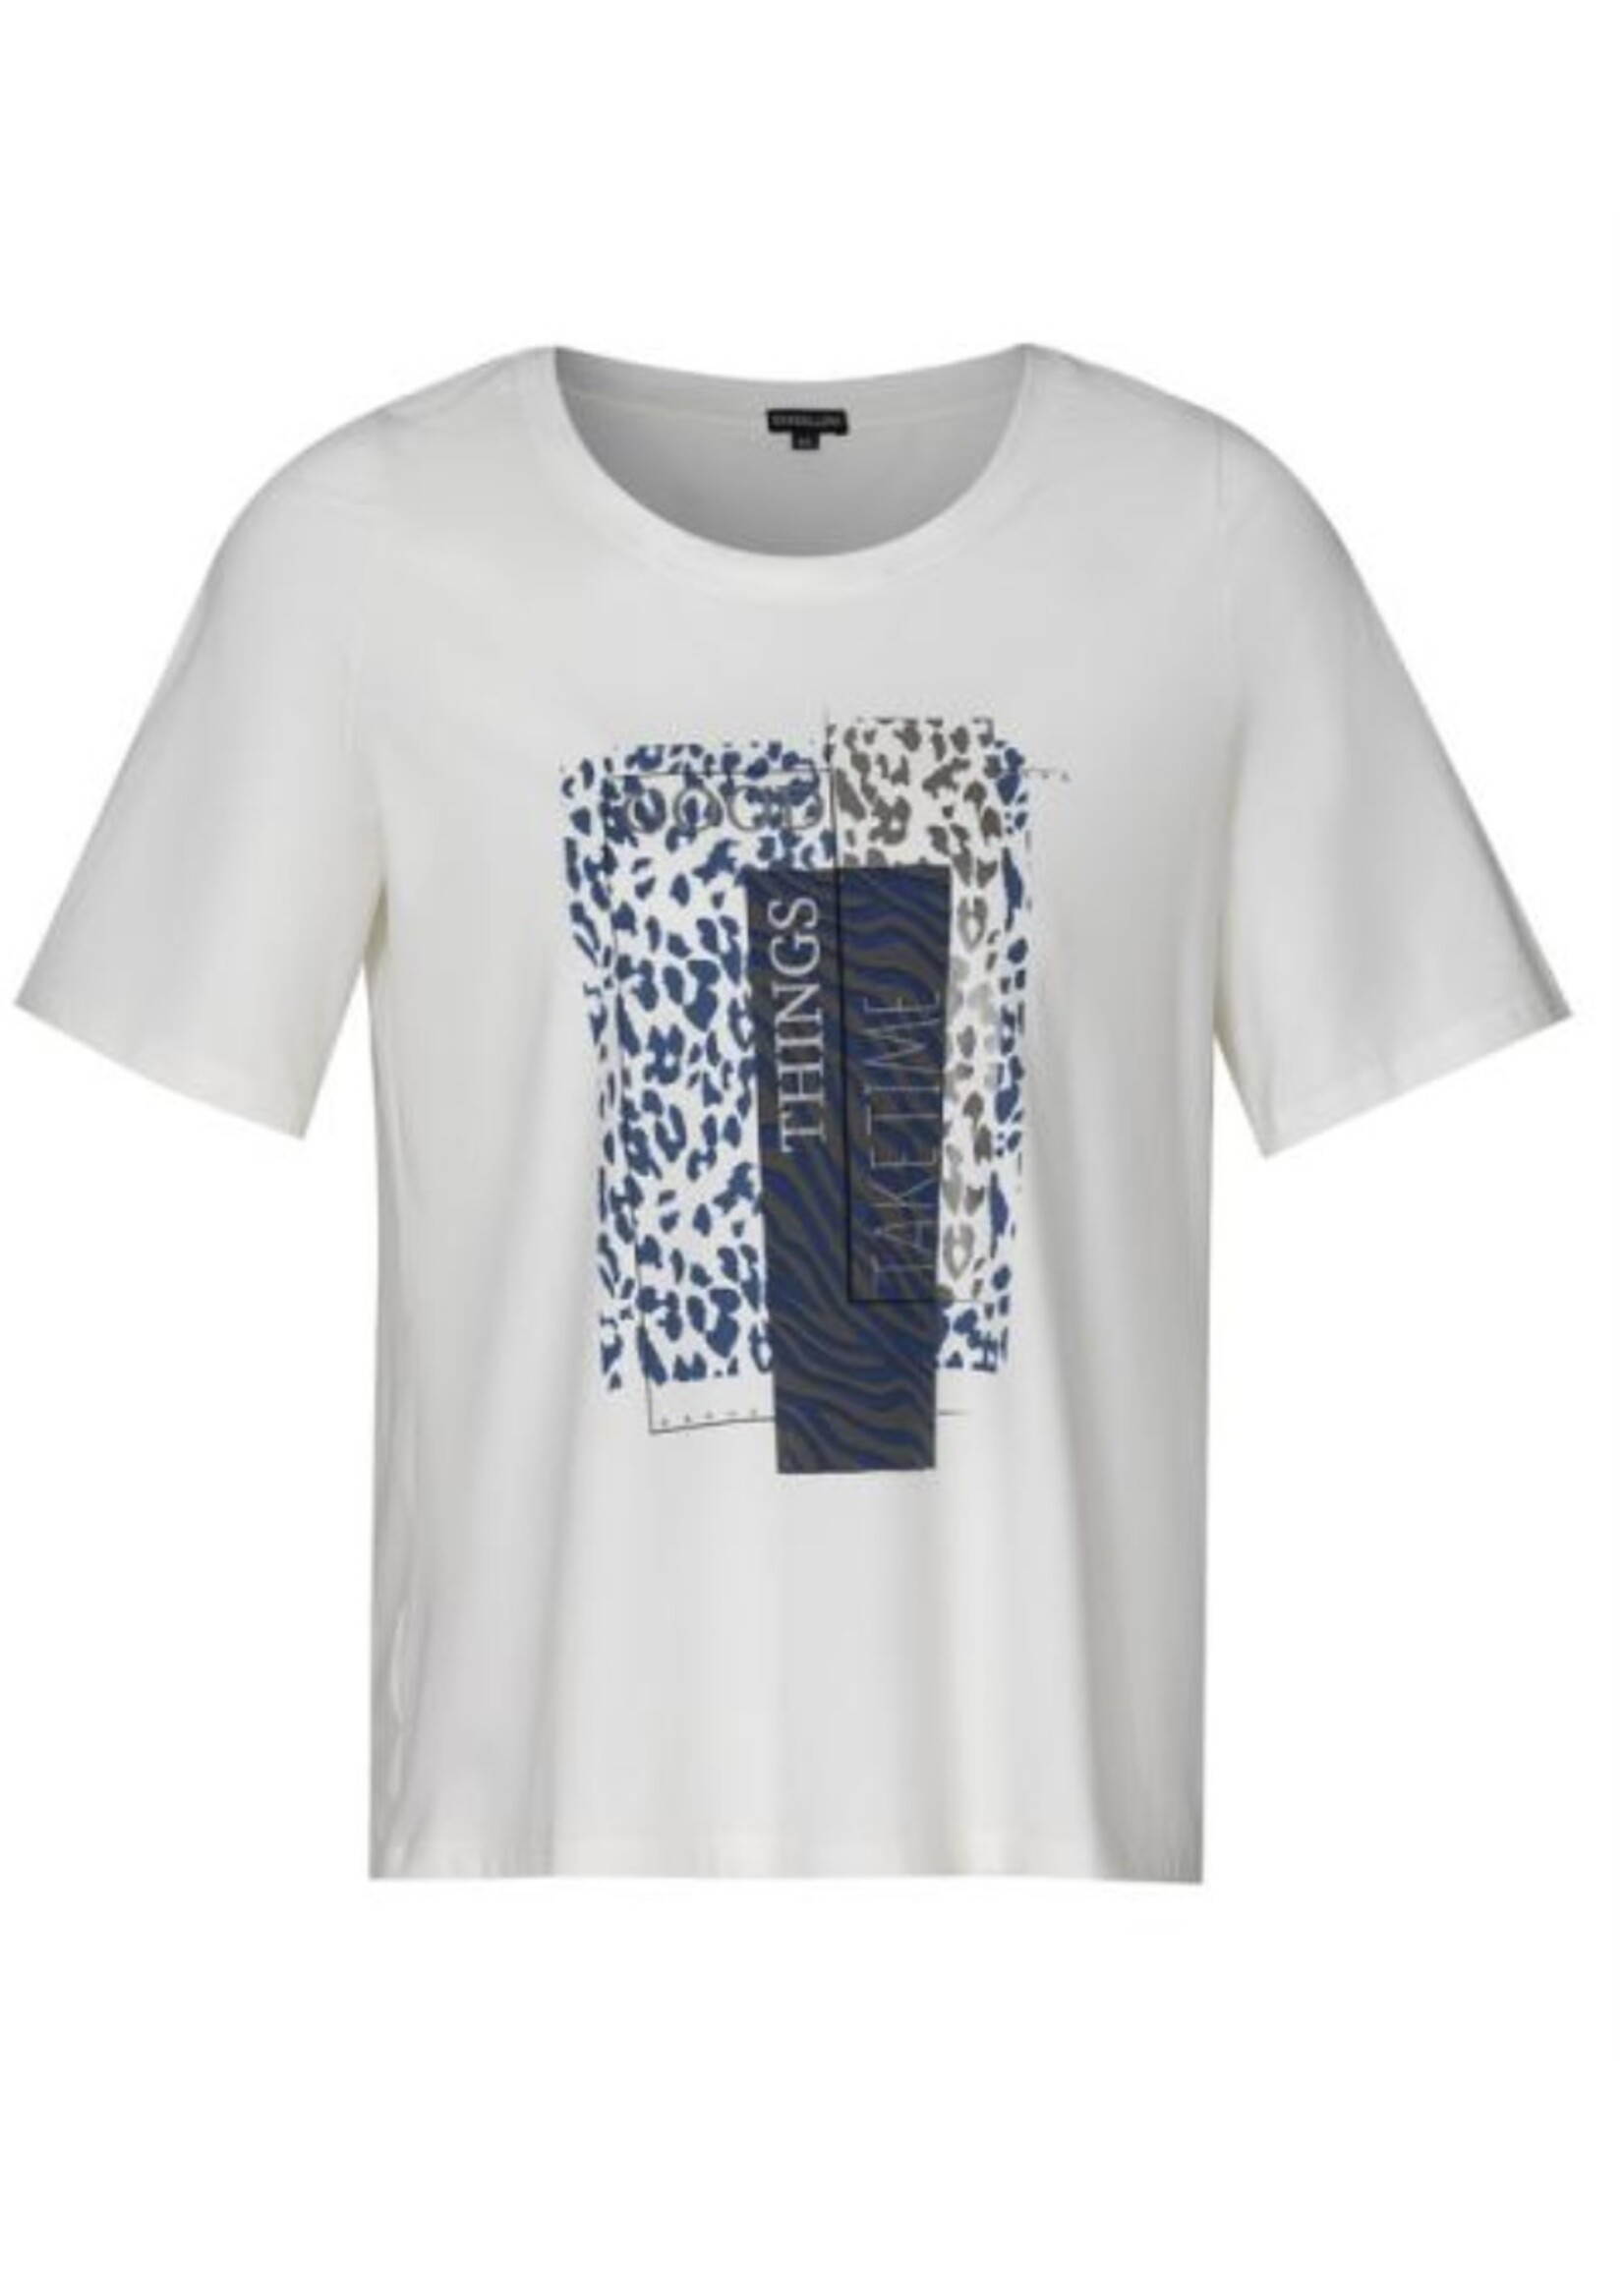 Exxcellent Exxcellent - Fay - T-shirt - Offwhite/Saffierblauw